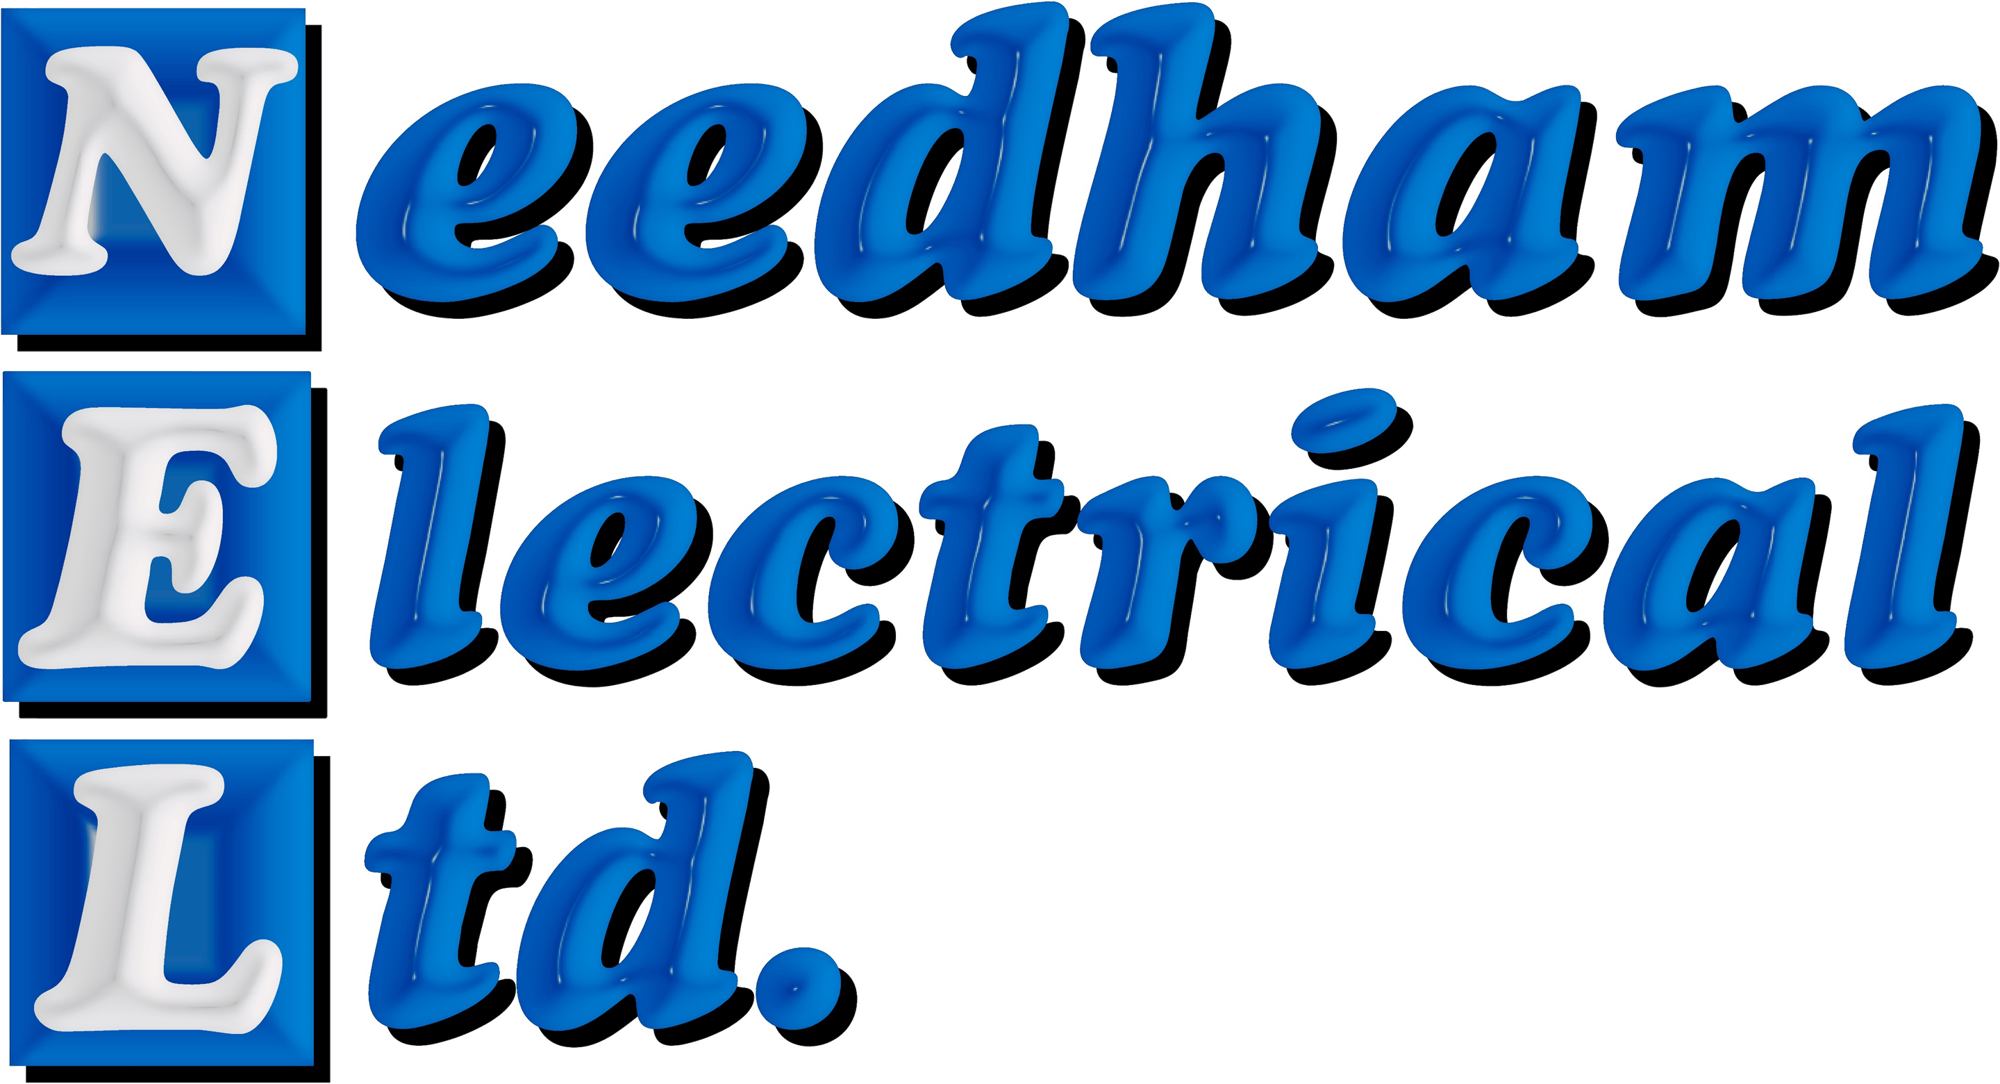 Needham Electrical Ltd